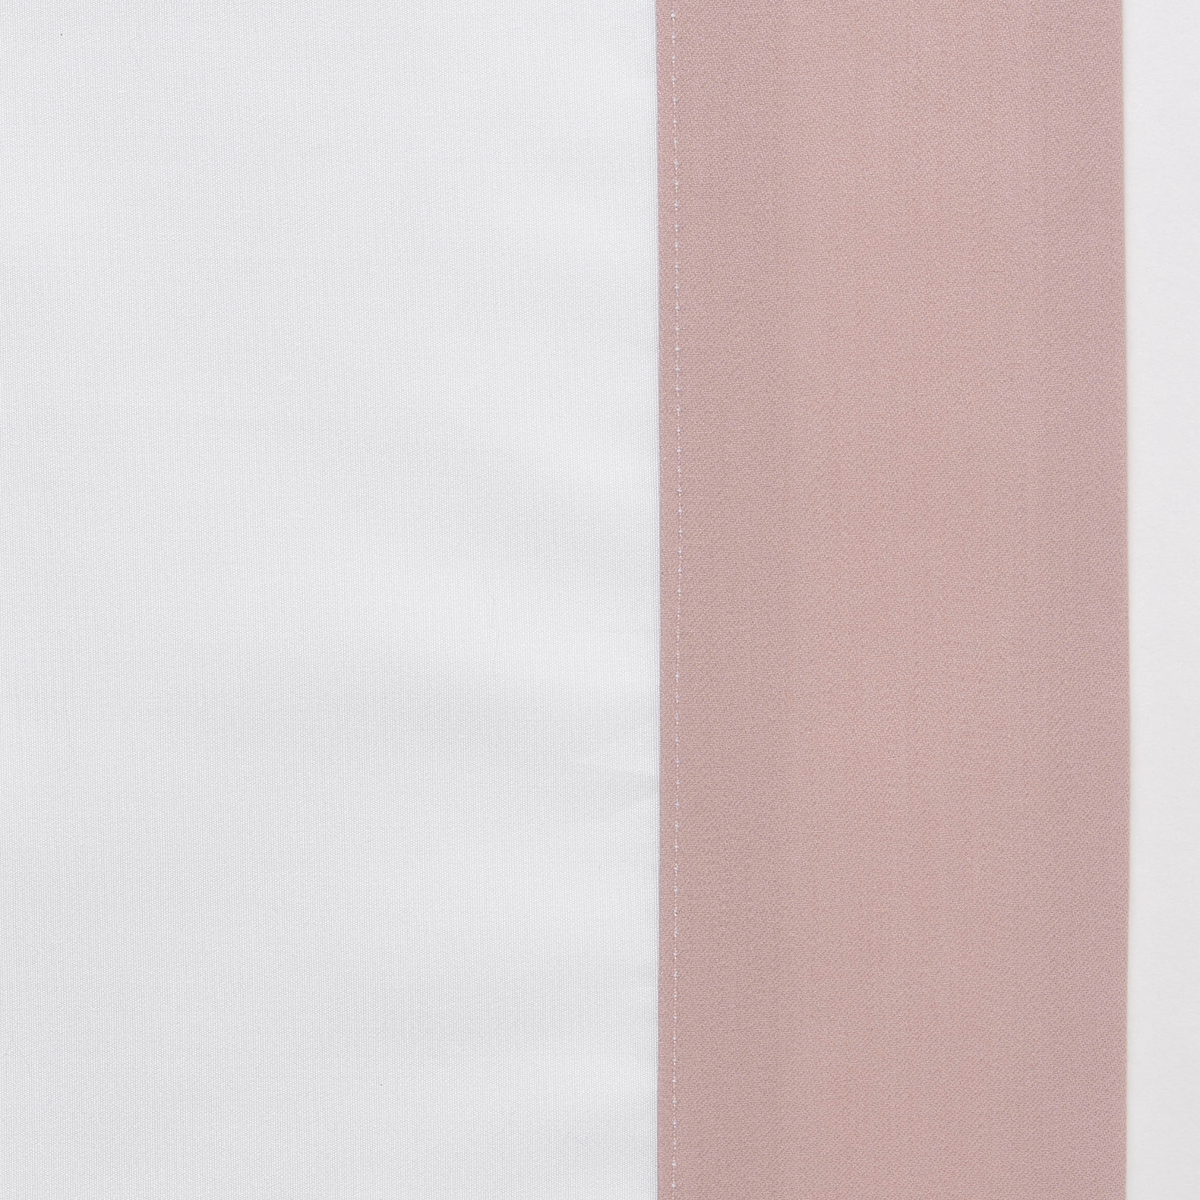 Swatch Sample of Celso de Lemos Hella Bedding in Nuage Rose Color